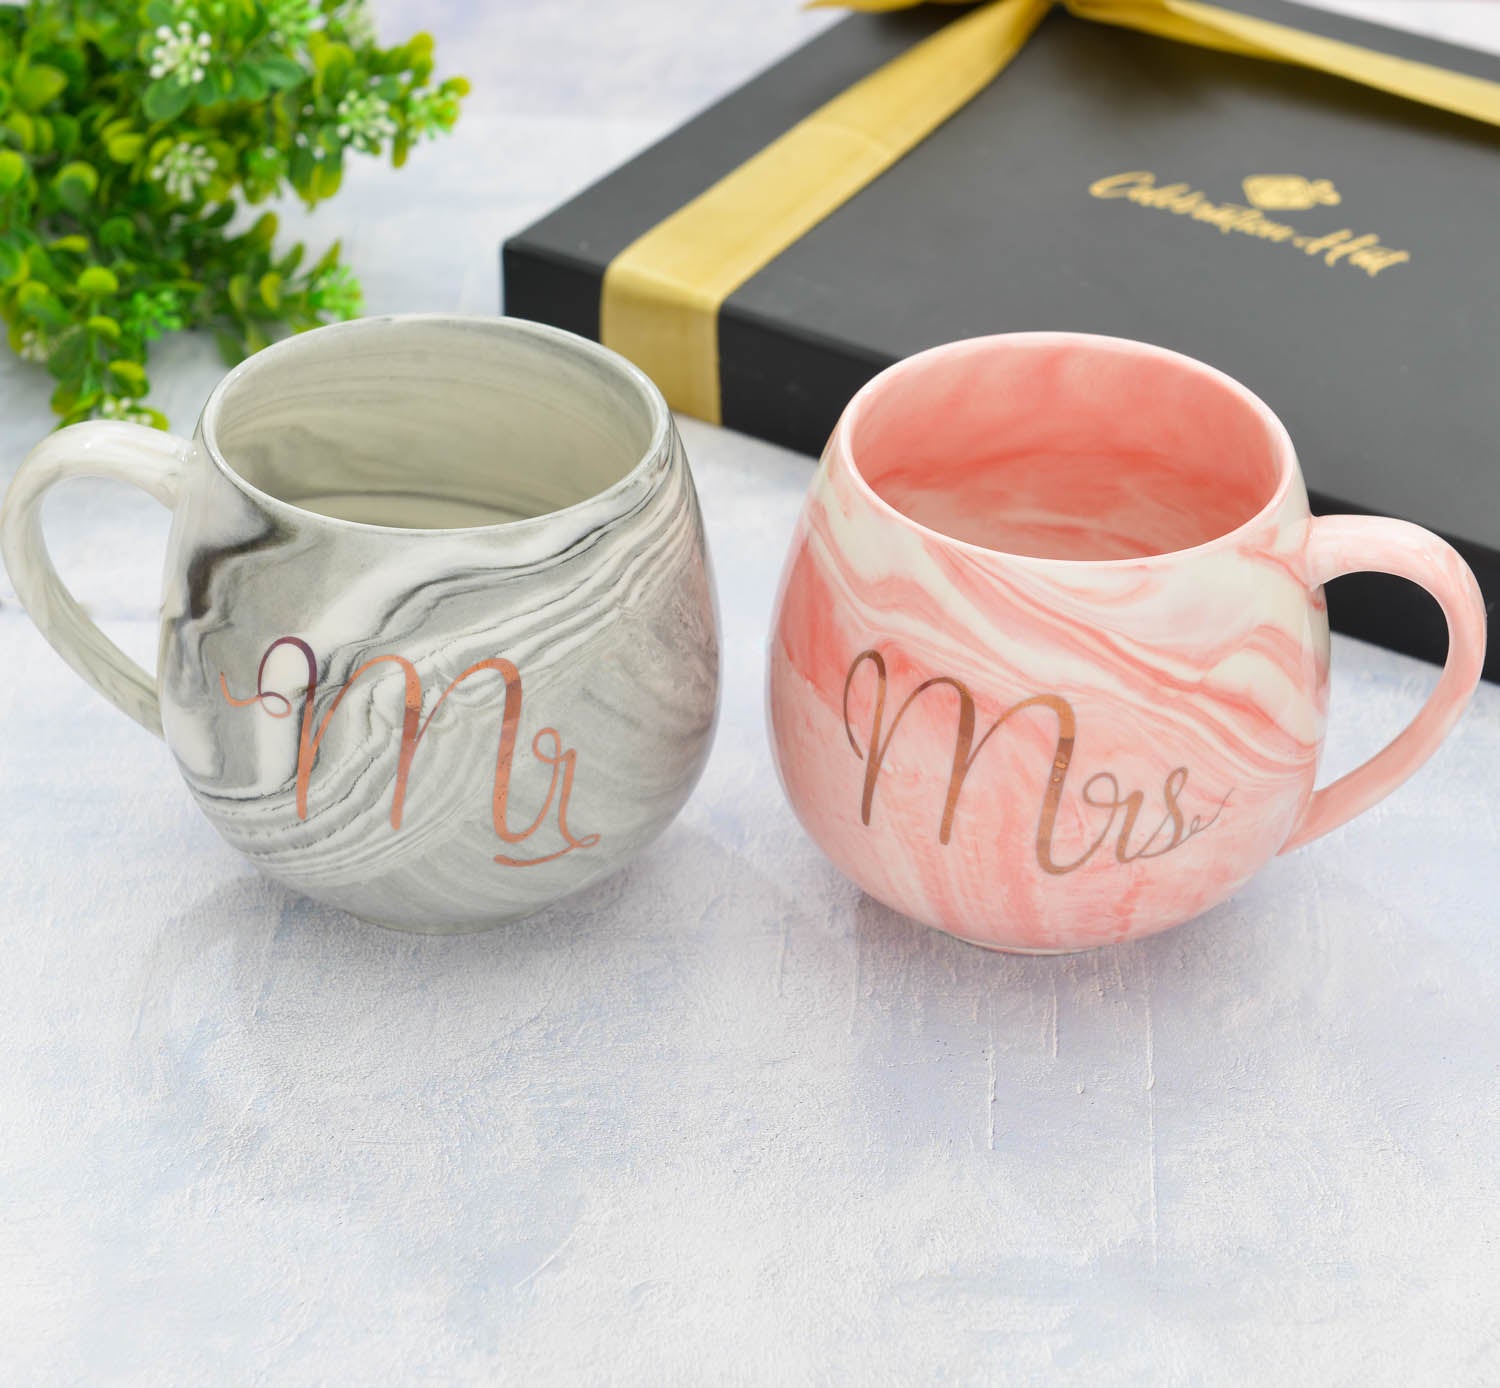 Mr. and Mrs. Marble Mug